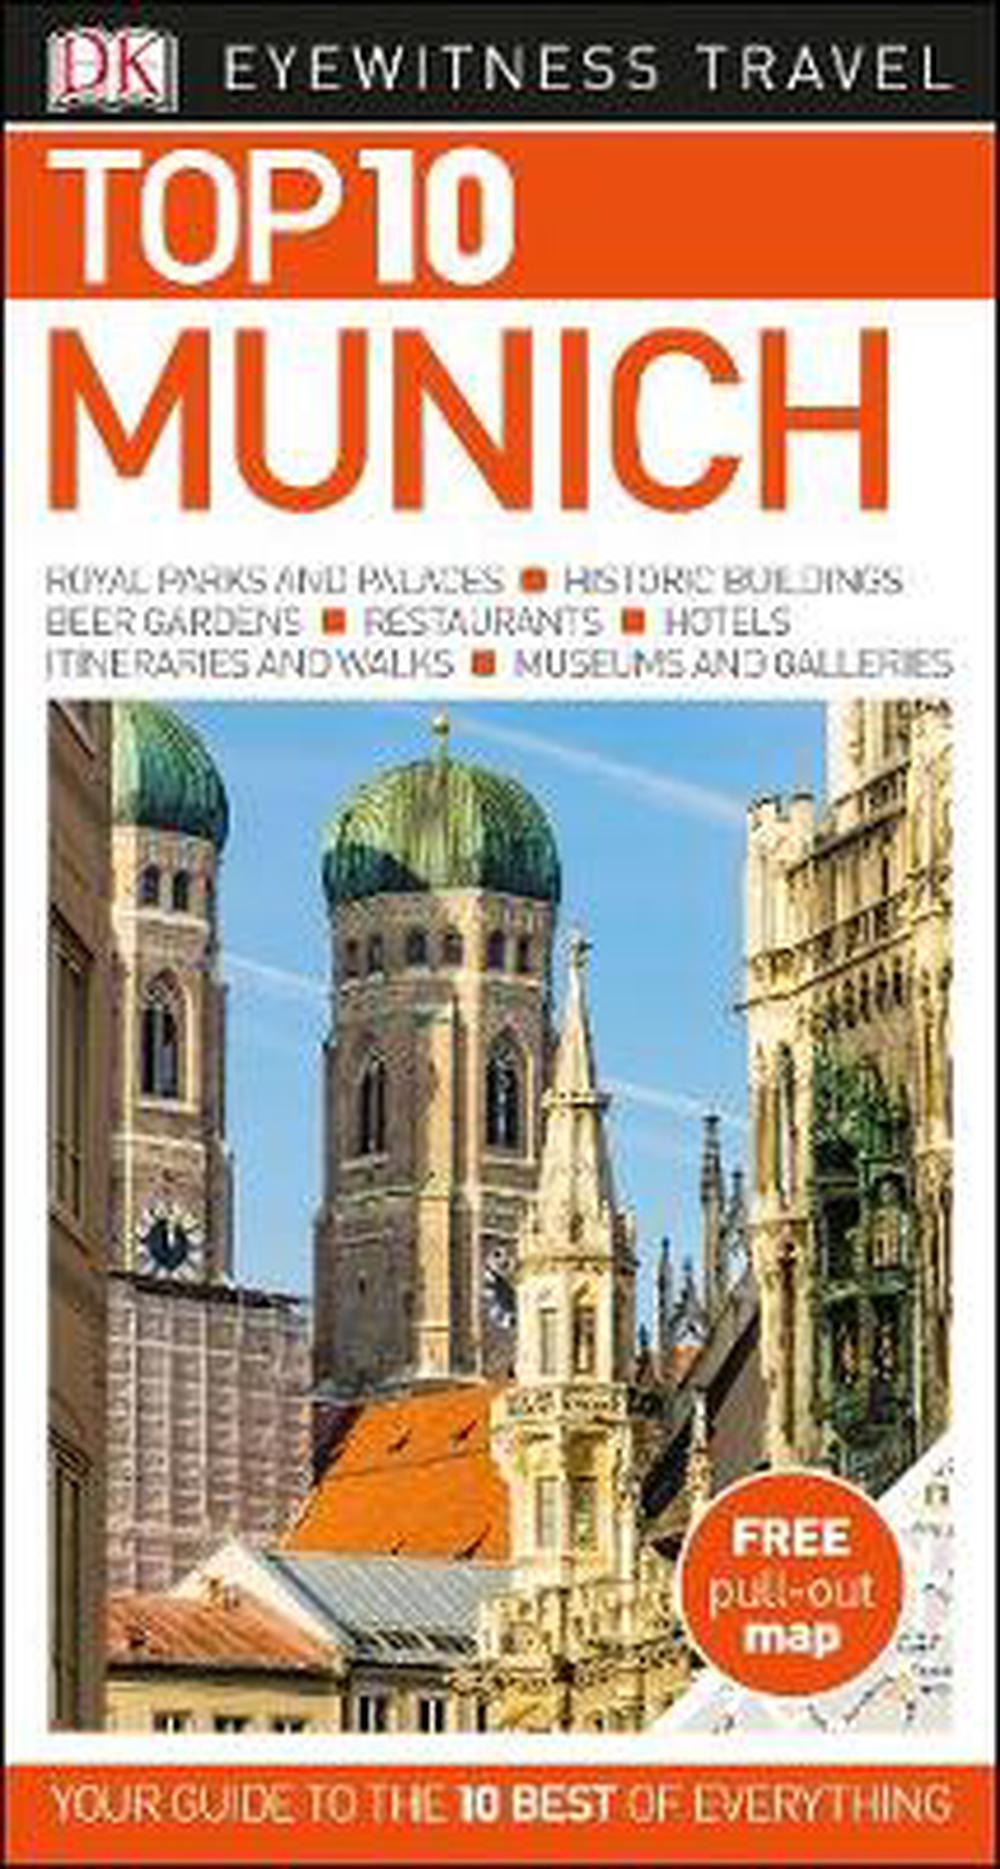 travel book for munich